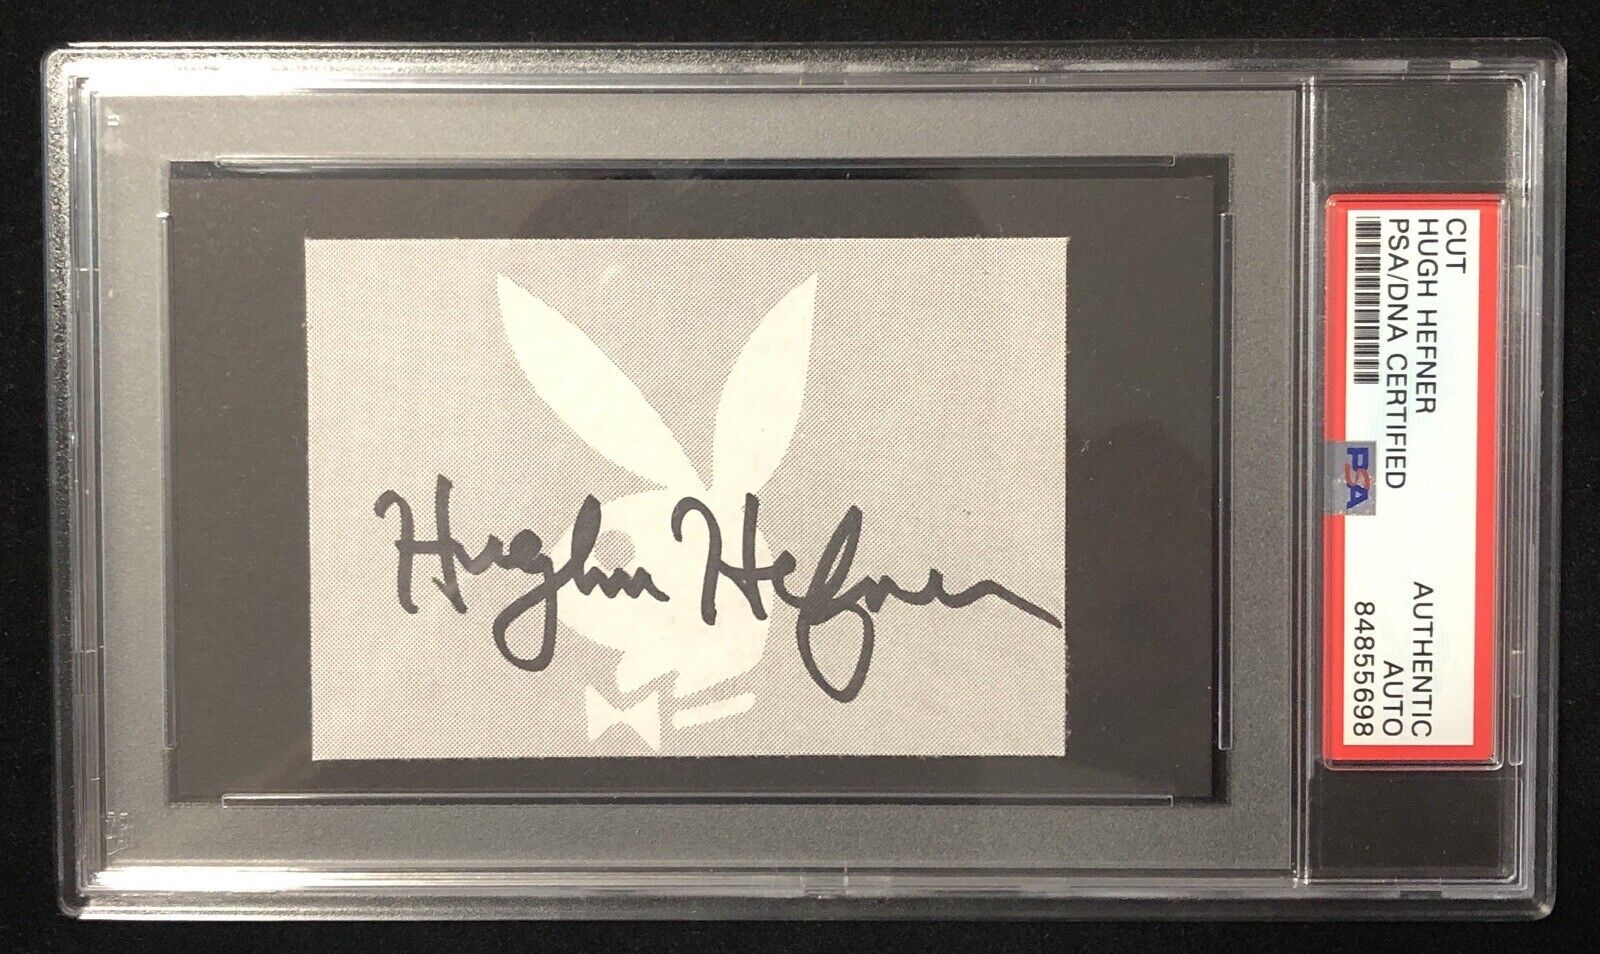 Hugh Hefner Signed Autograph Cut Playboy Autograph PSA/DNA Auto Signature Rare